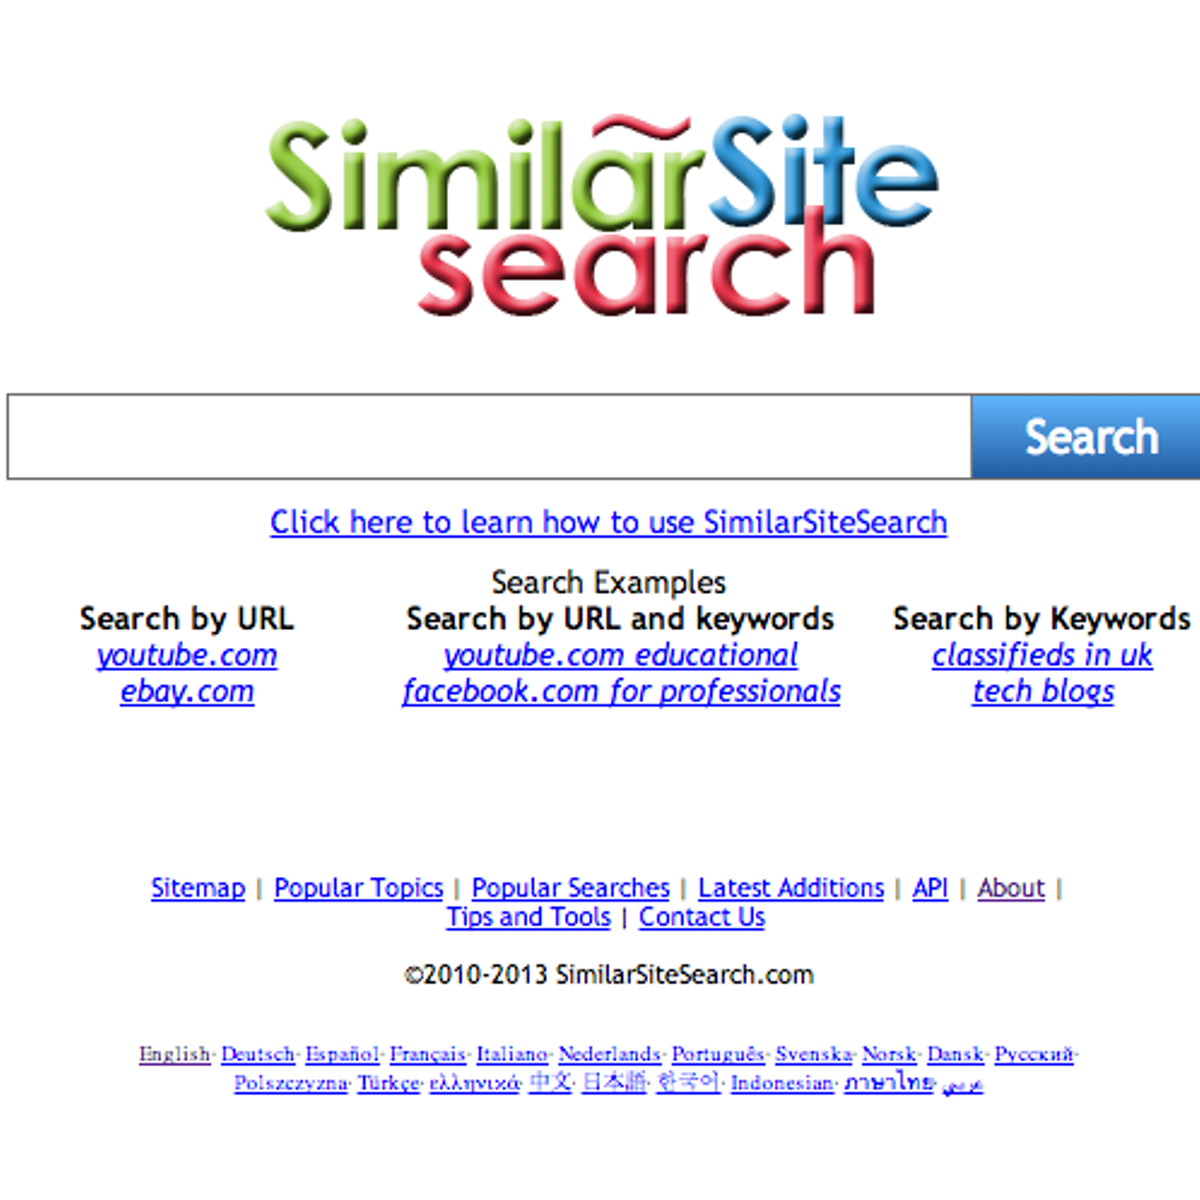 Similar searches